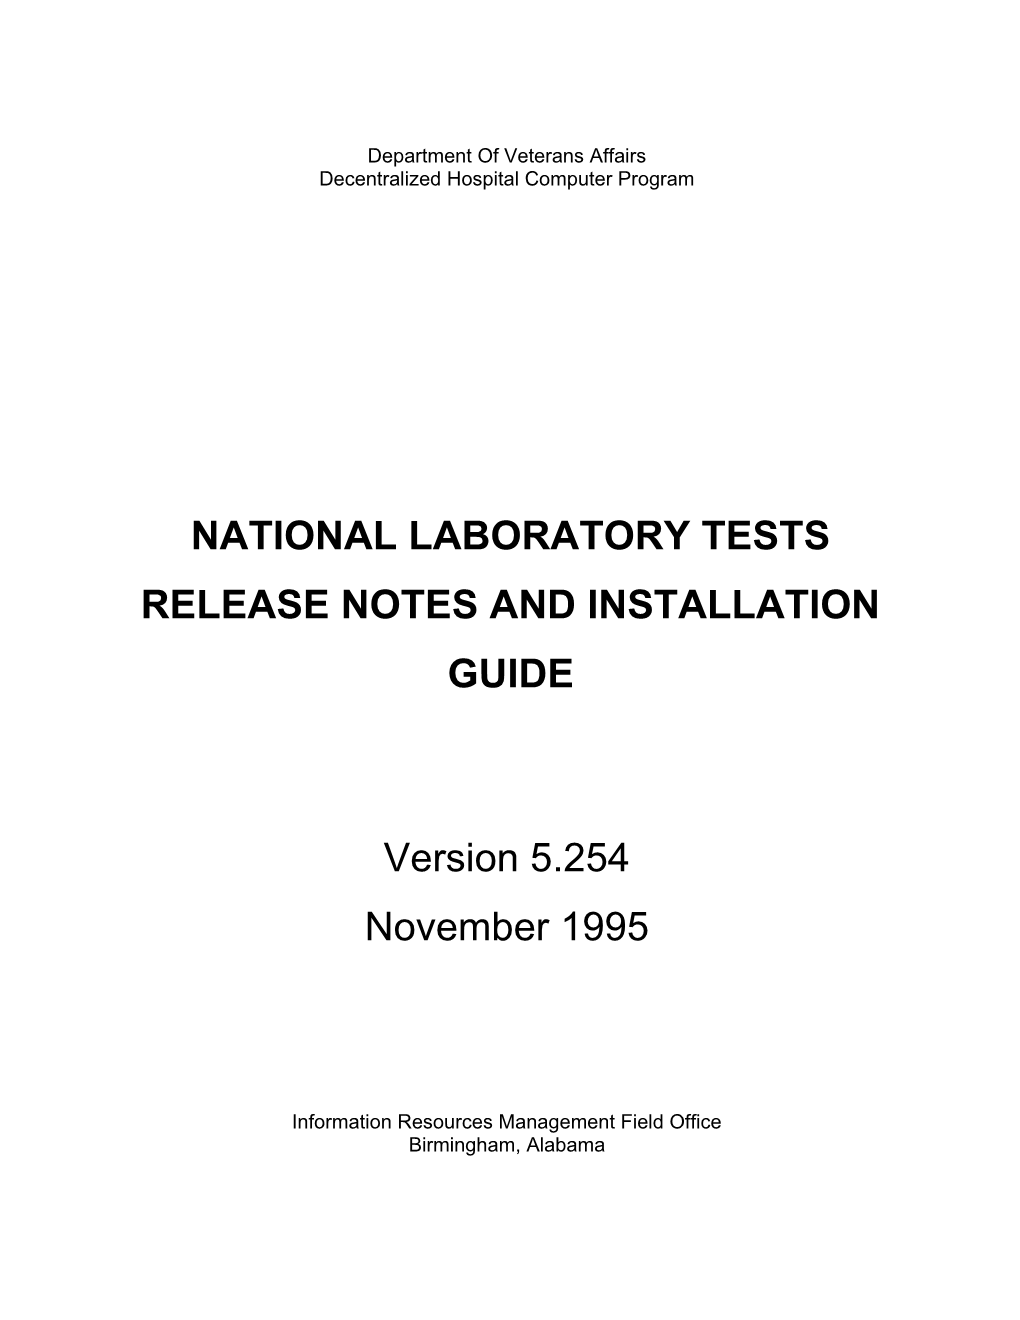 NLT Release Notes